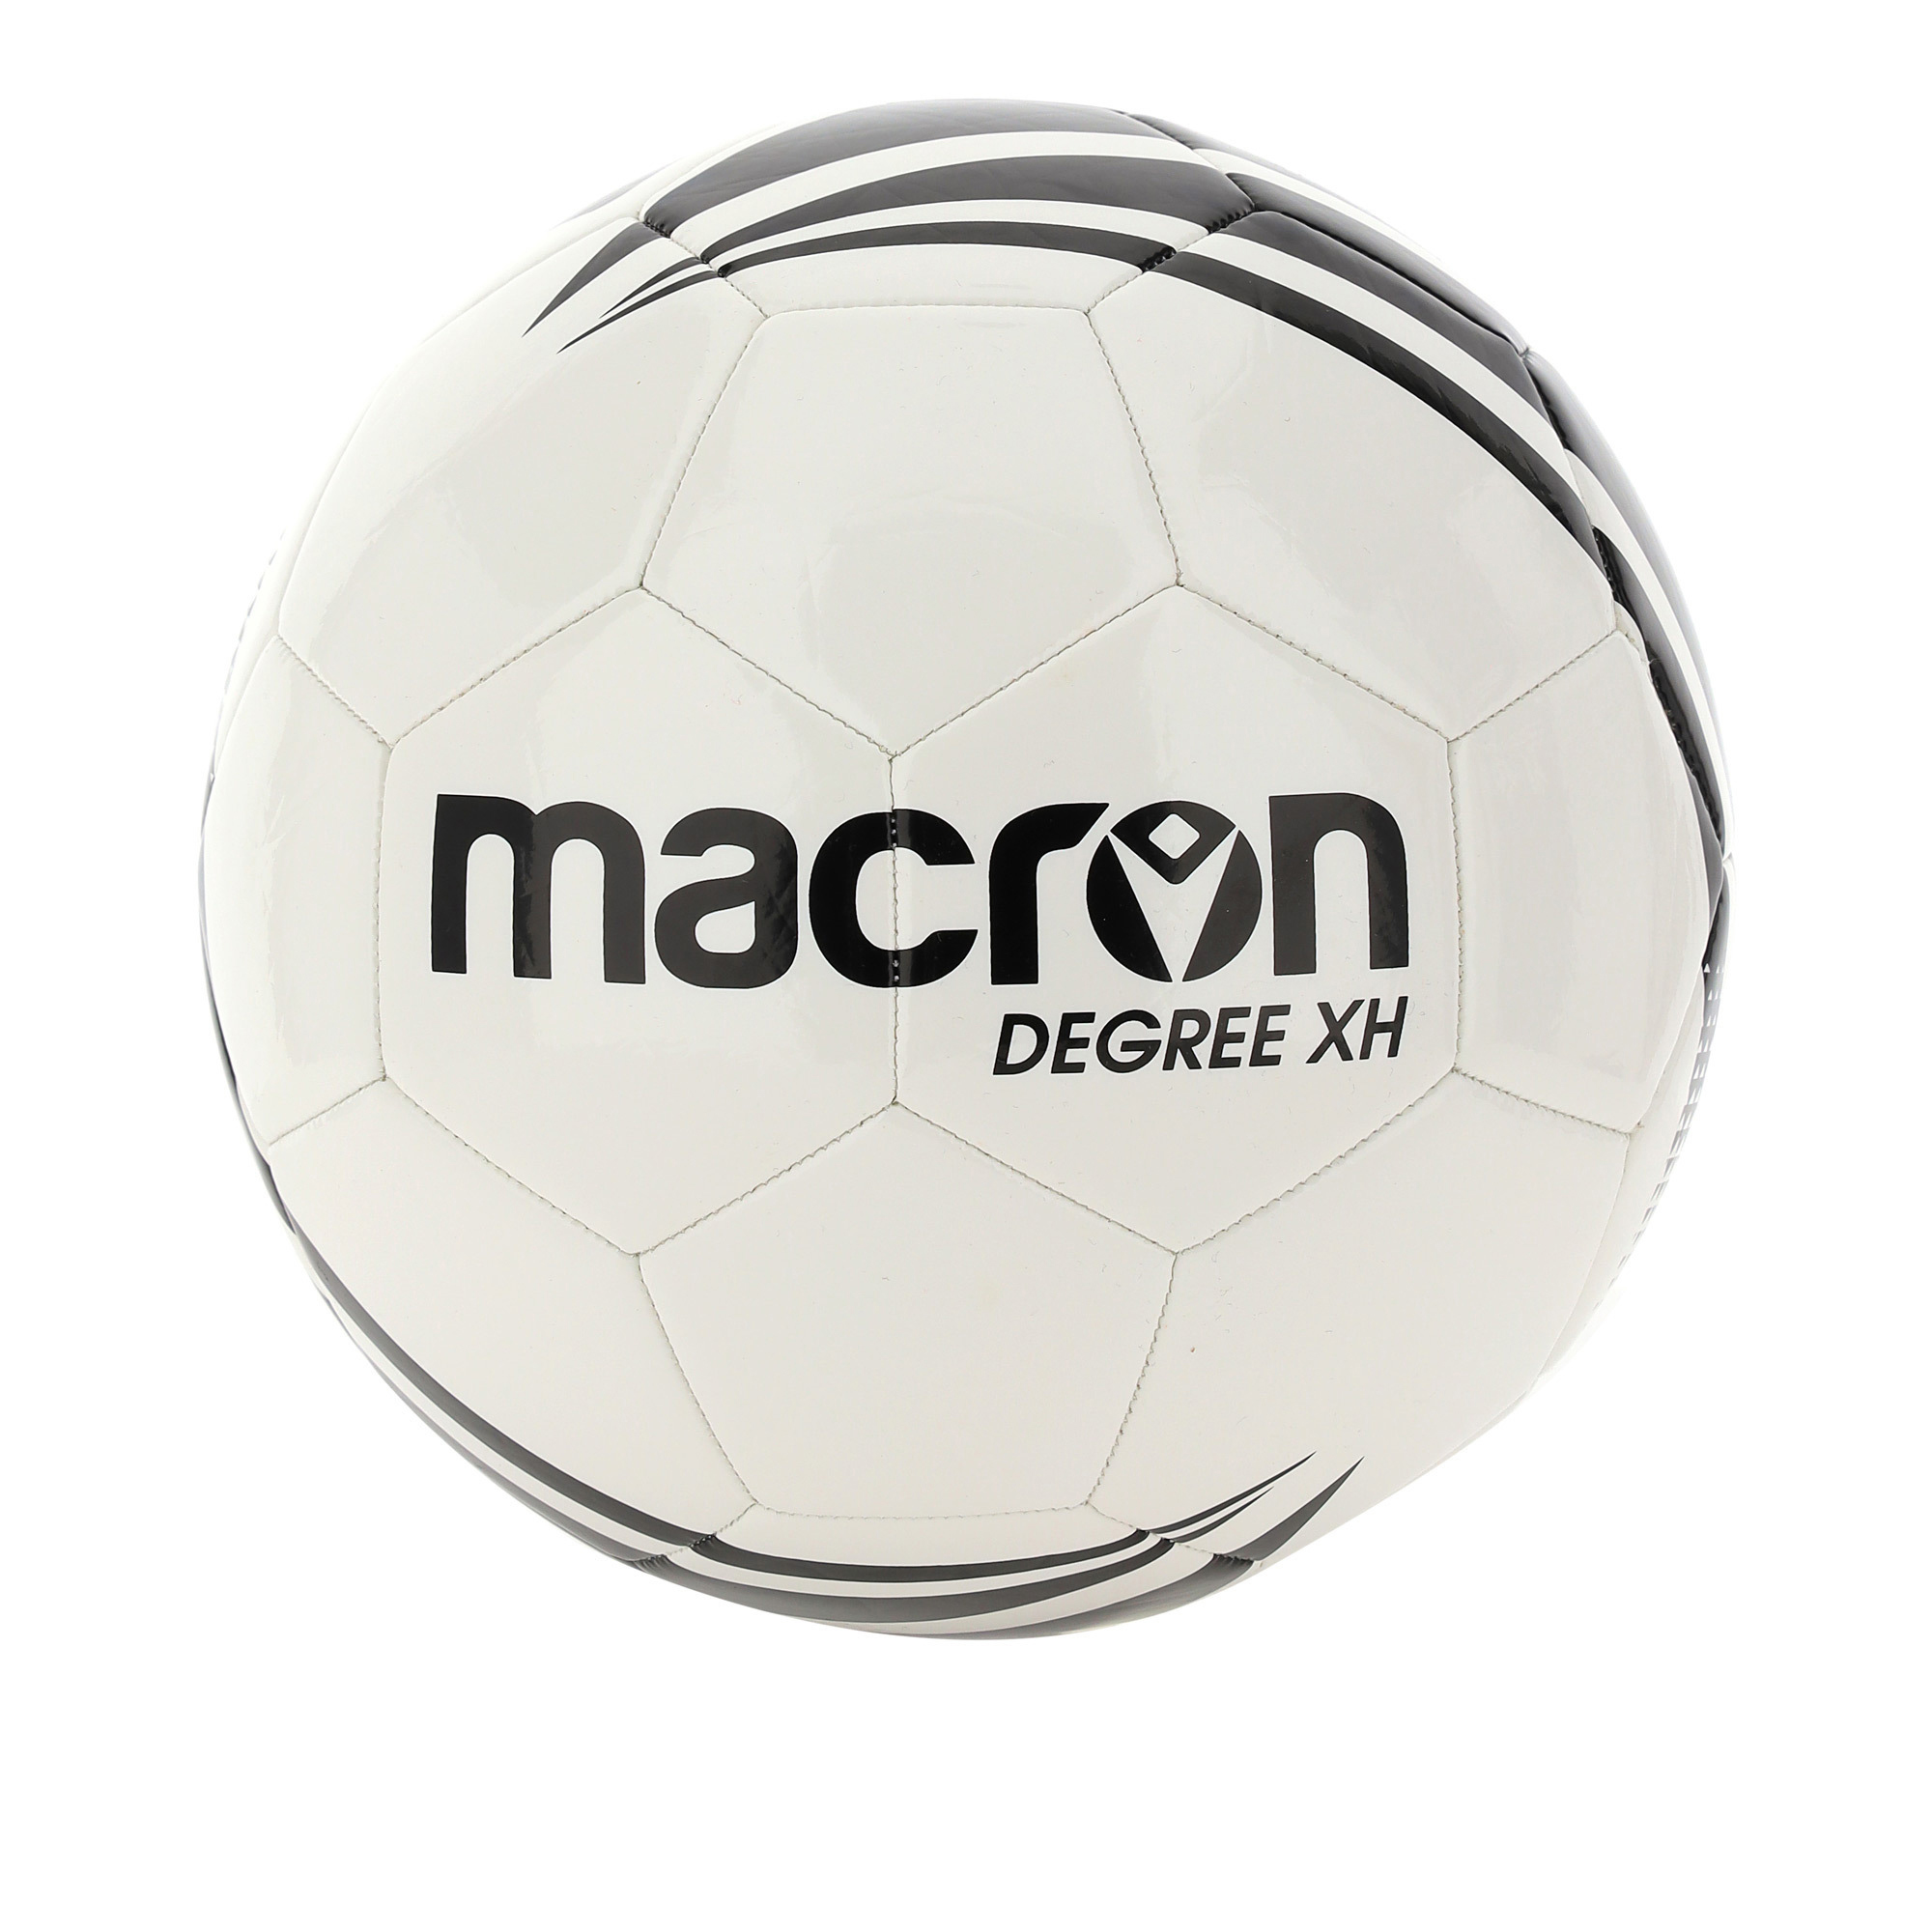 Macron Fussball Größe 3 Degree